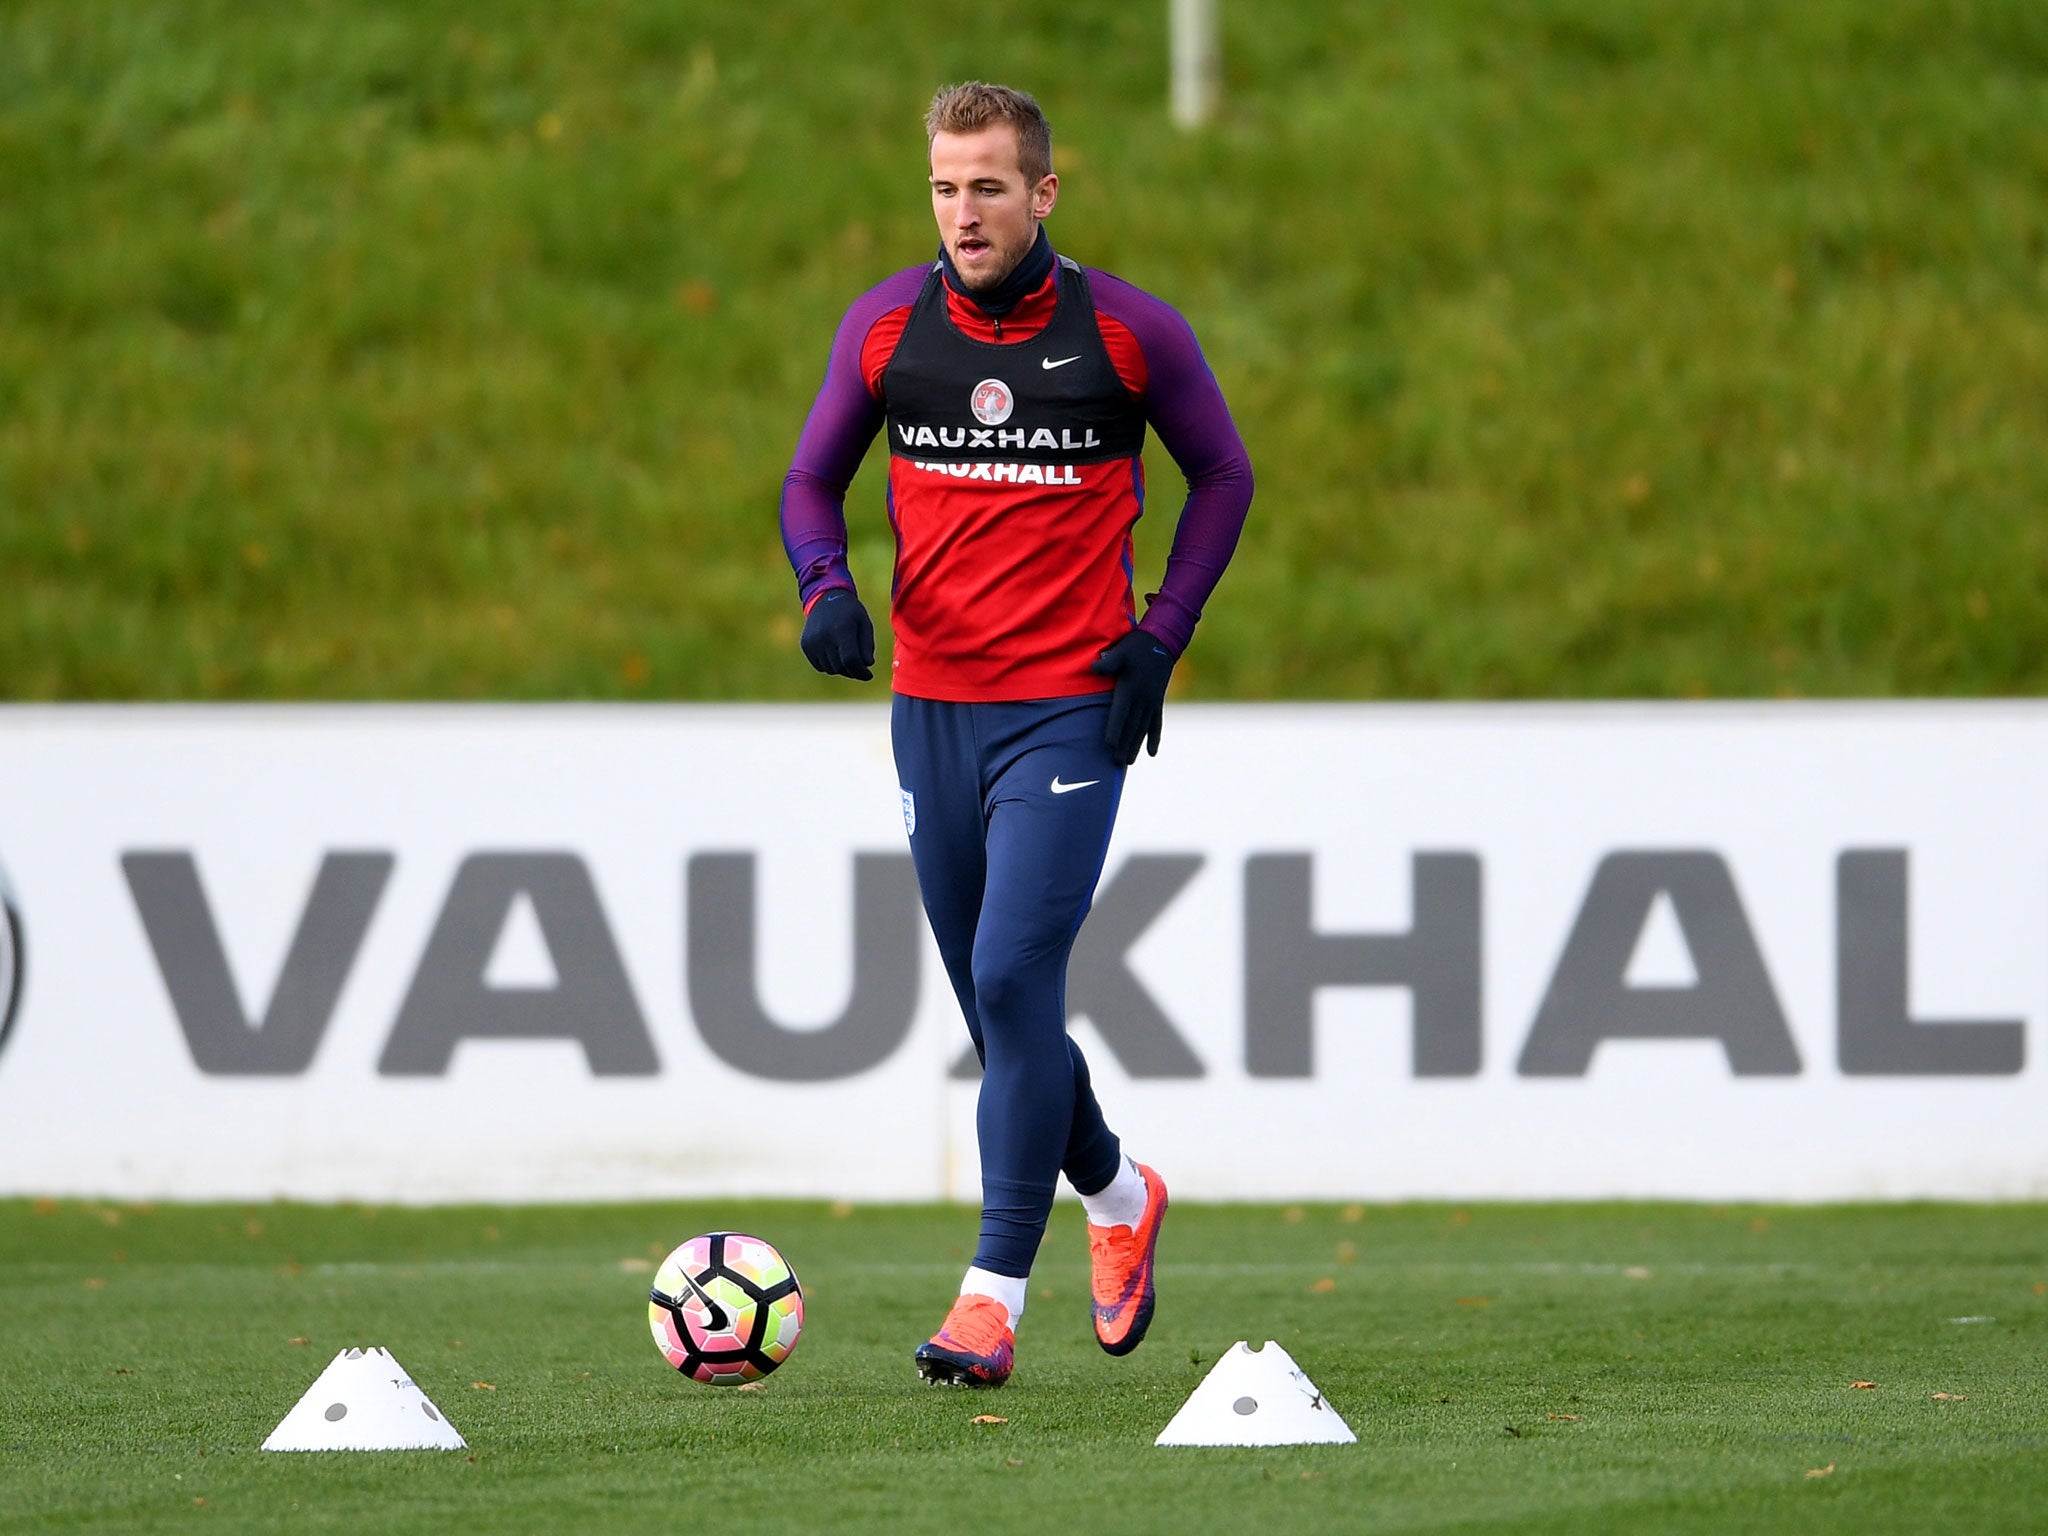 Kane has transformed himself into England's best striker